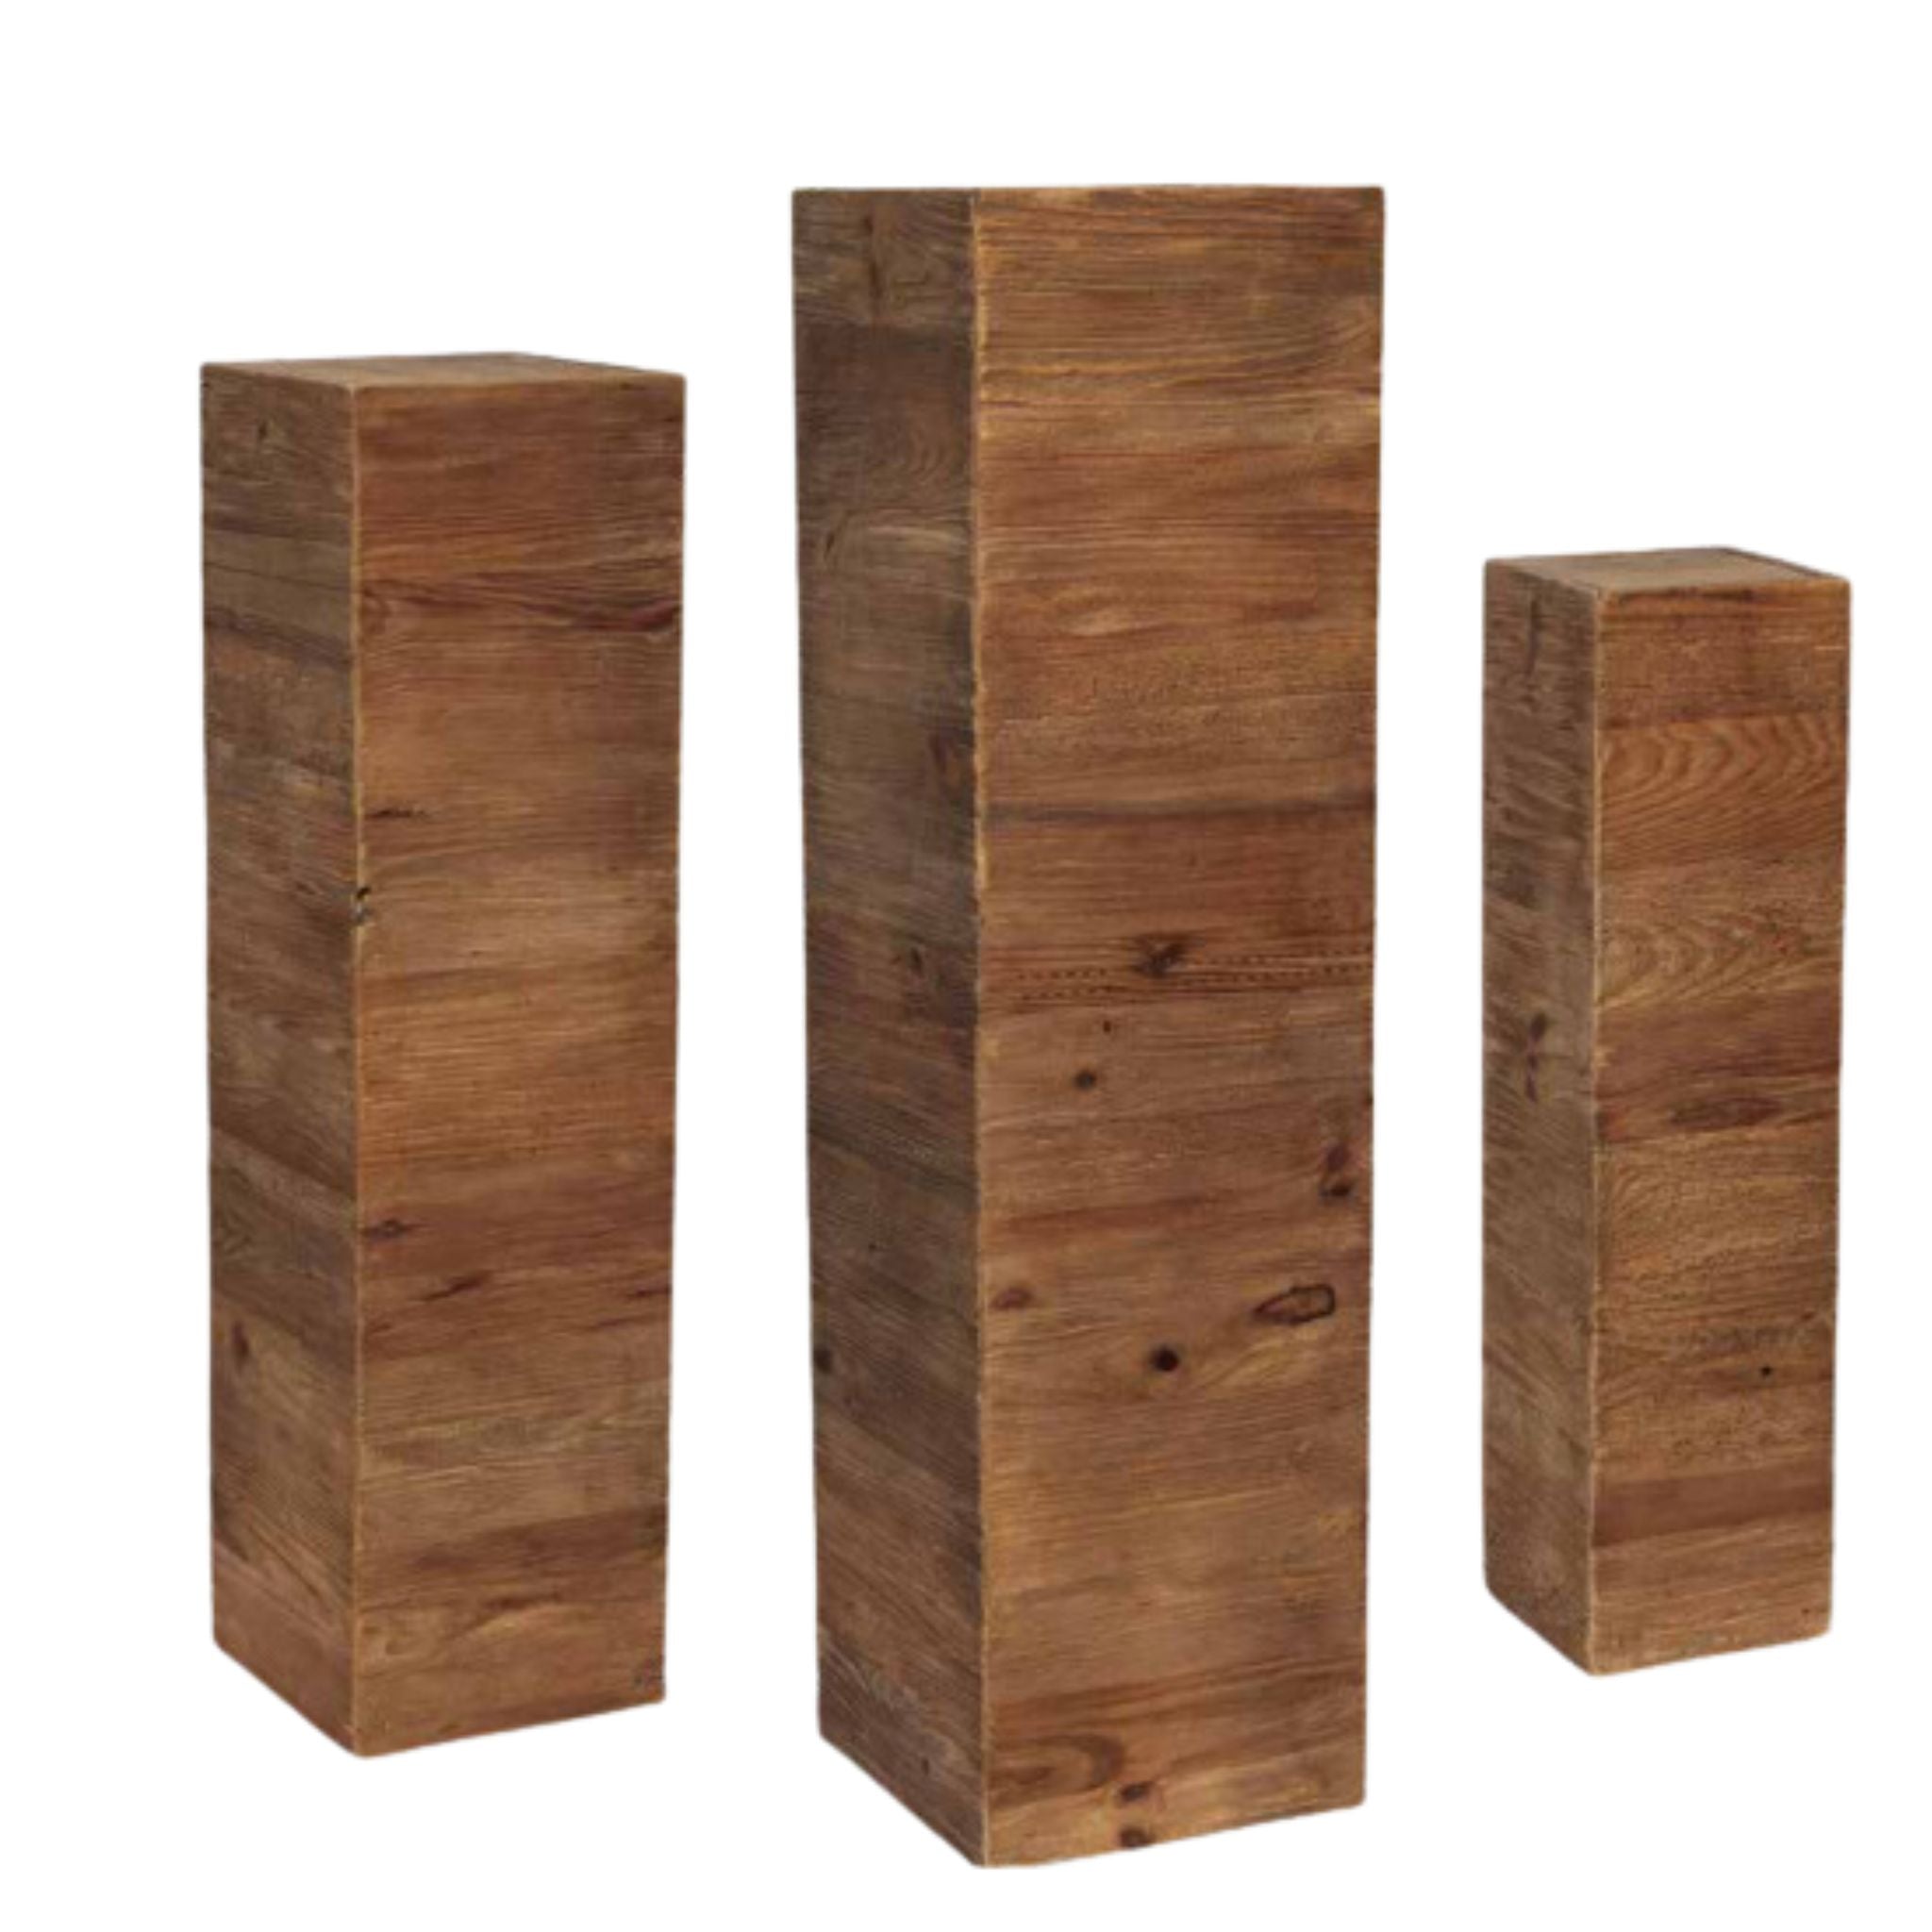 Decorative pillars made of pine wood